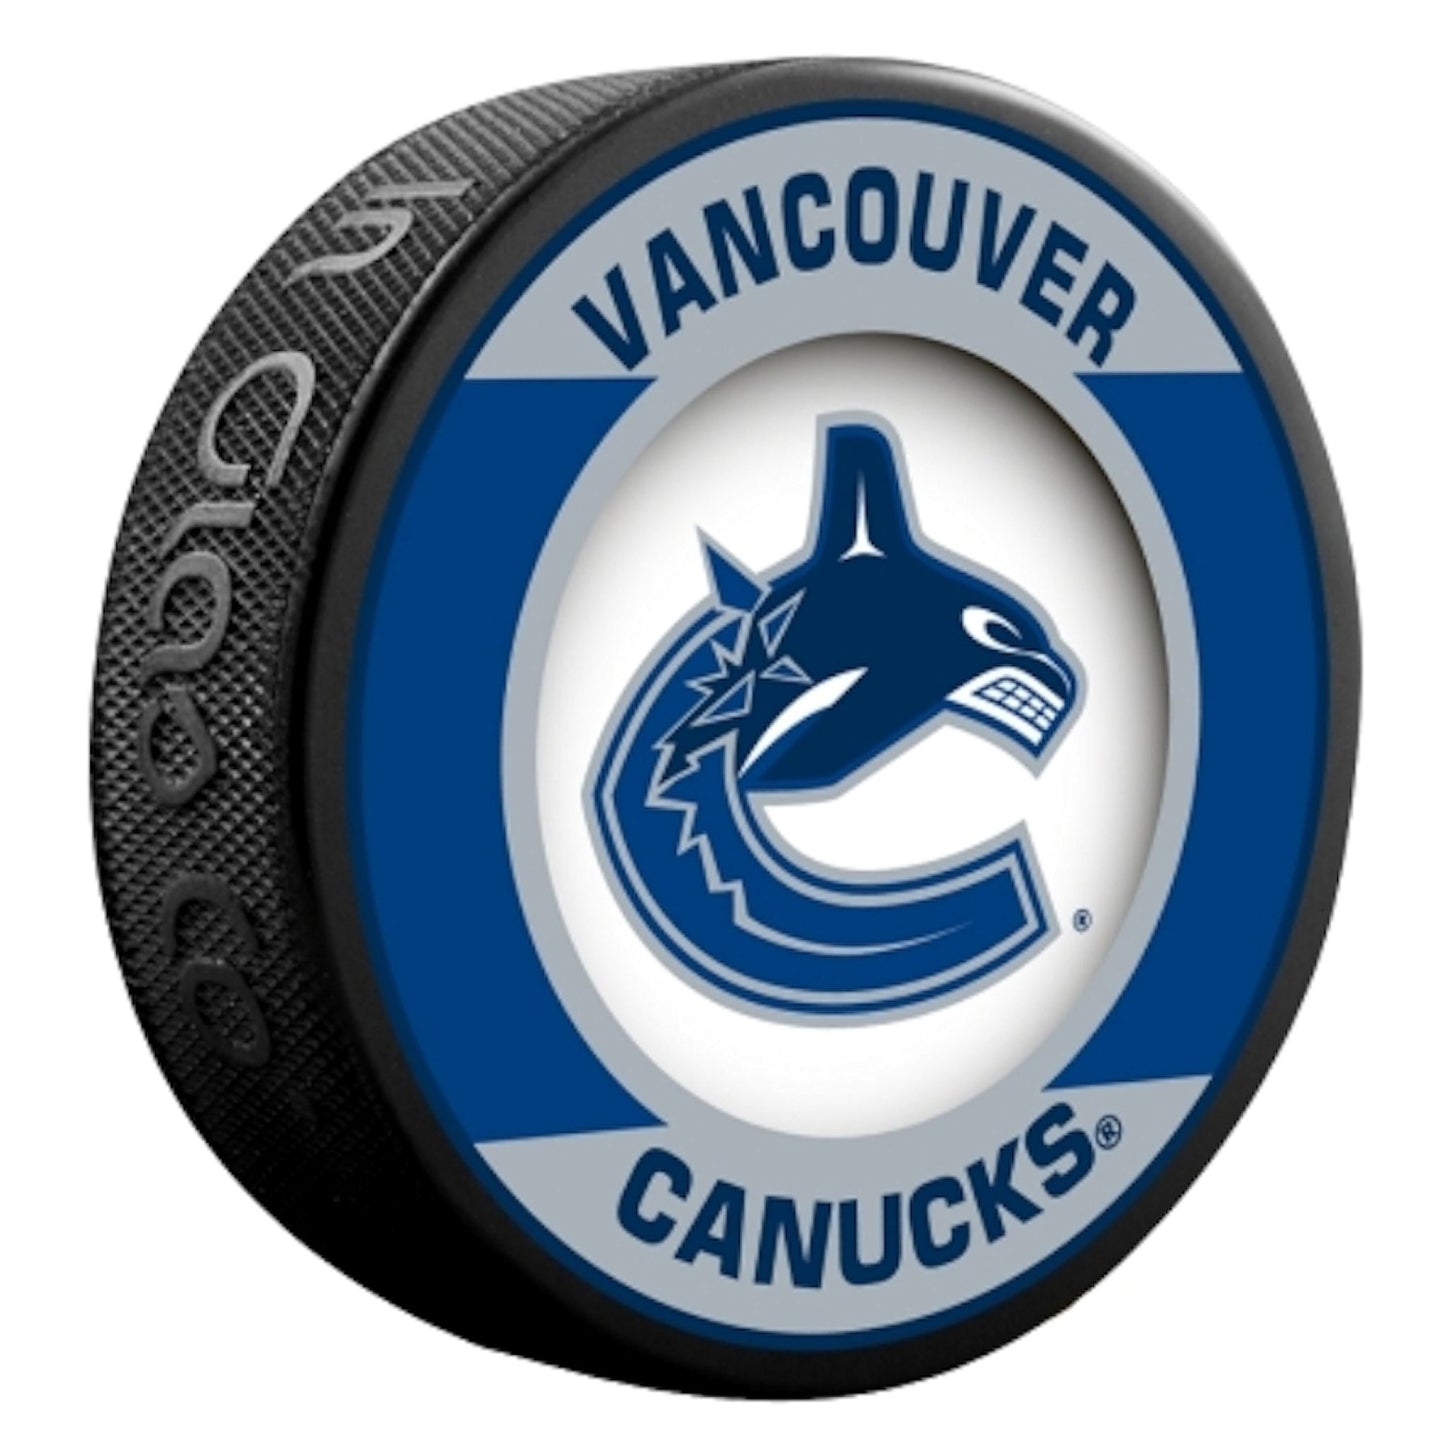 Vancouver Canucks Retro Series Collectible Hockey Puck